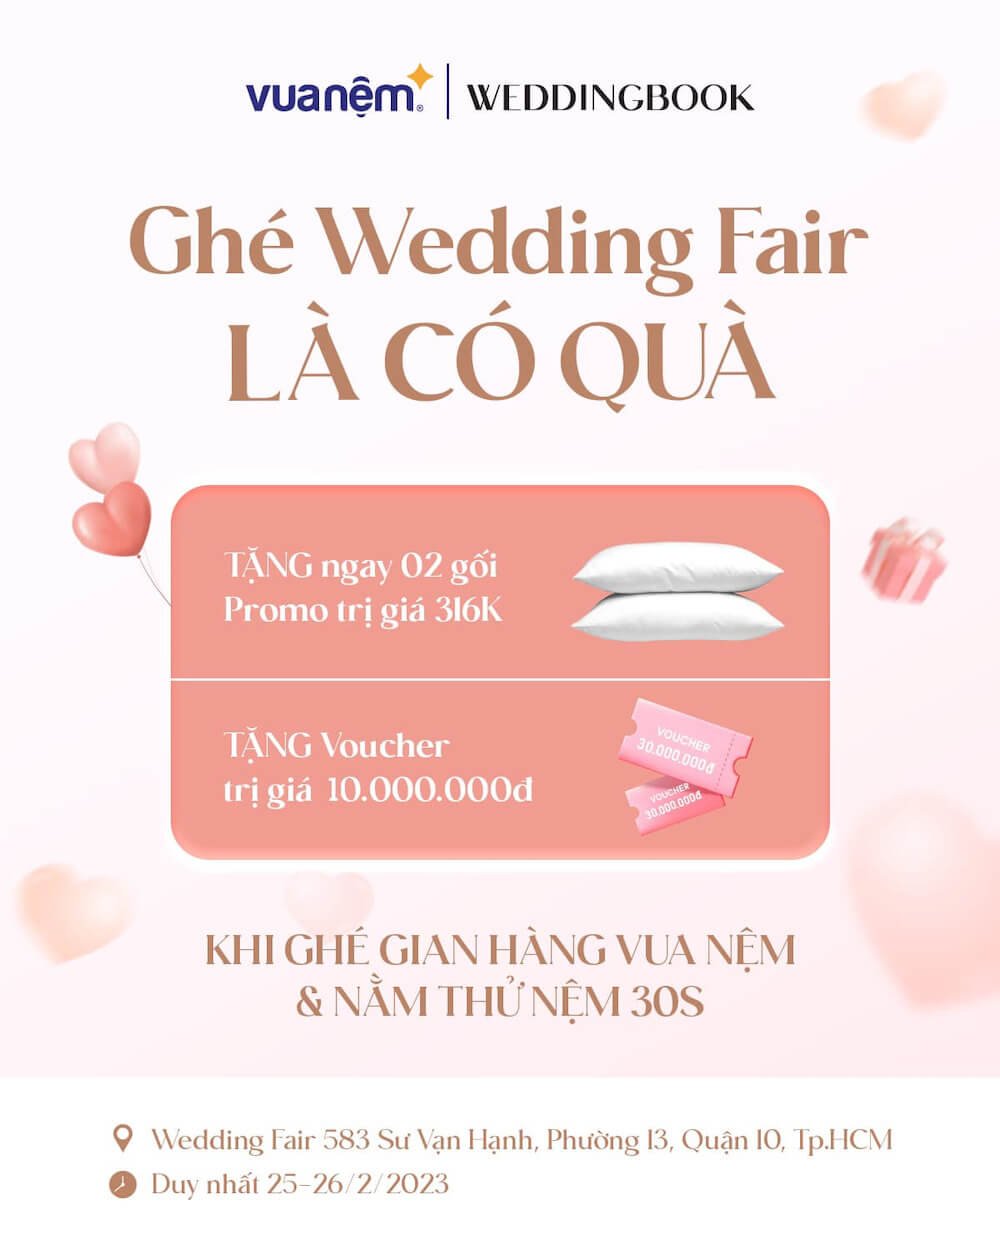 Vua Nệm và Wedding Book Saigon tổ chức sự kiện Wedding Fair 